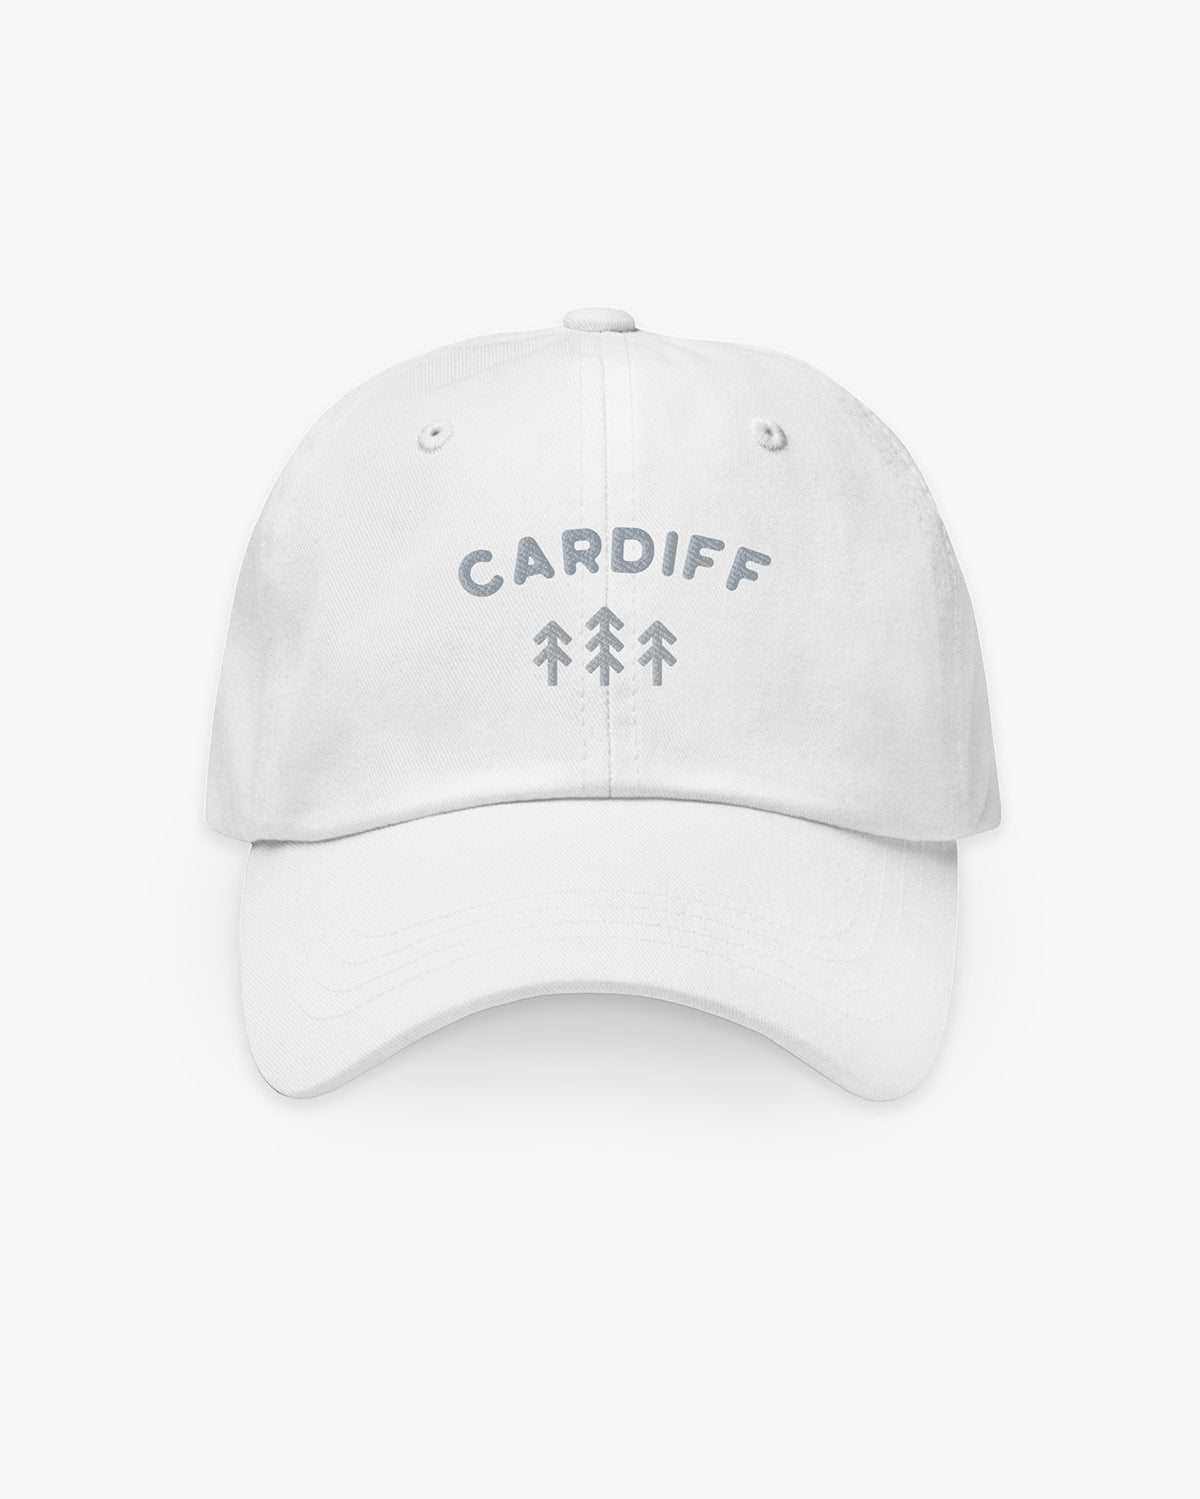 Trees - Cardiff - Hat